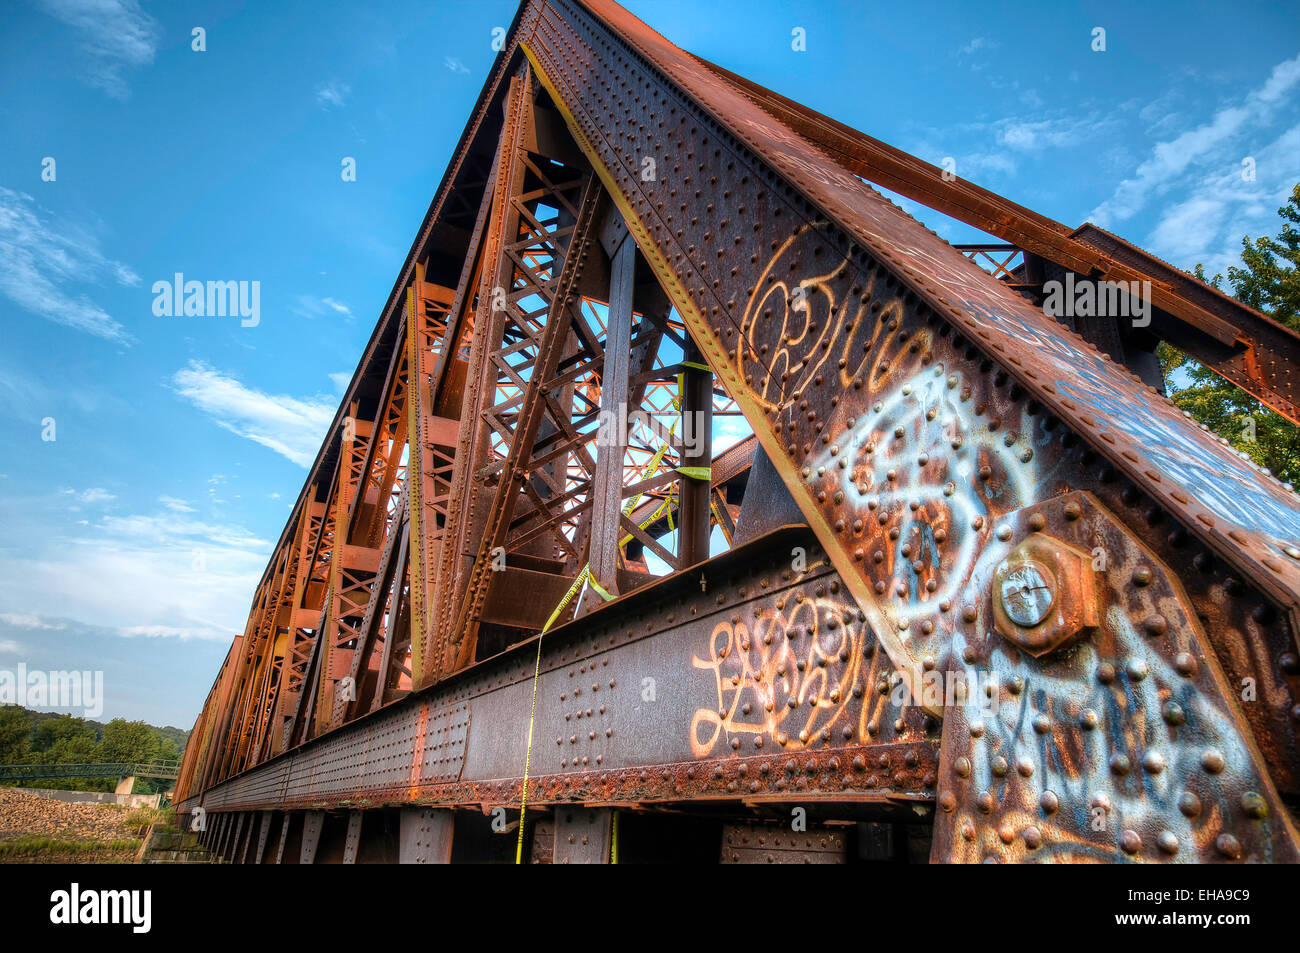 Graffiti On Old Rusty Train Bridge Stock Photo